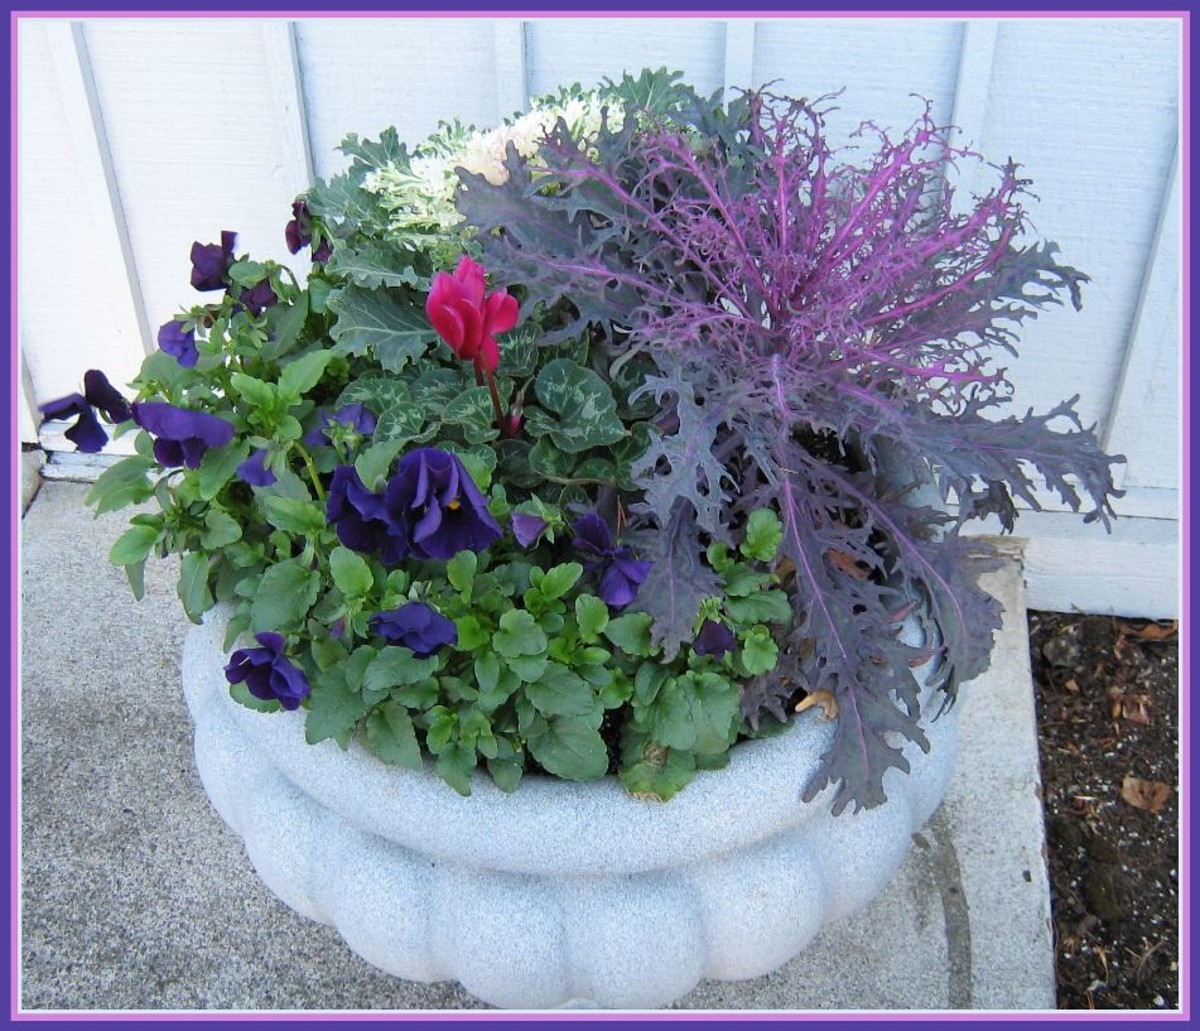 Purple flowers in a white urn